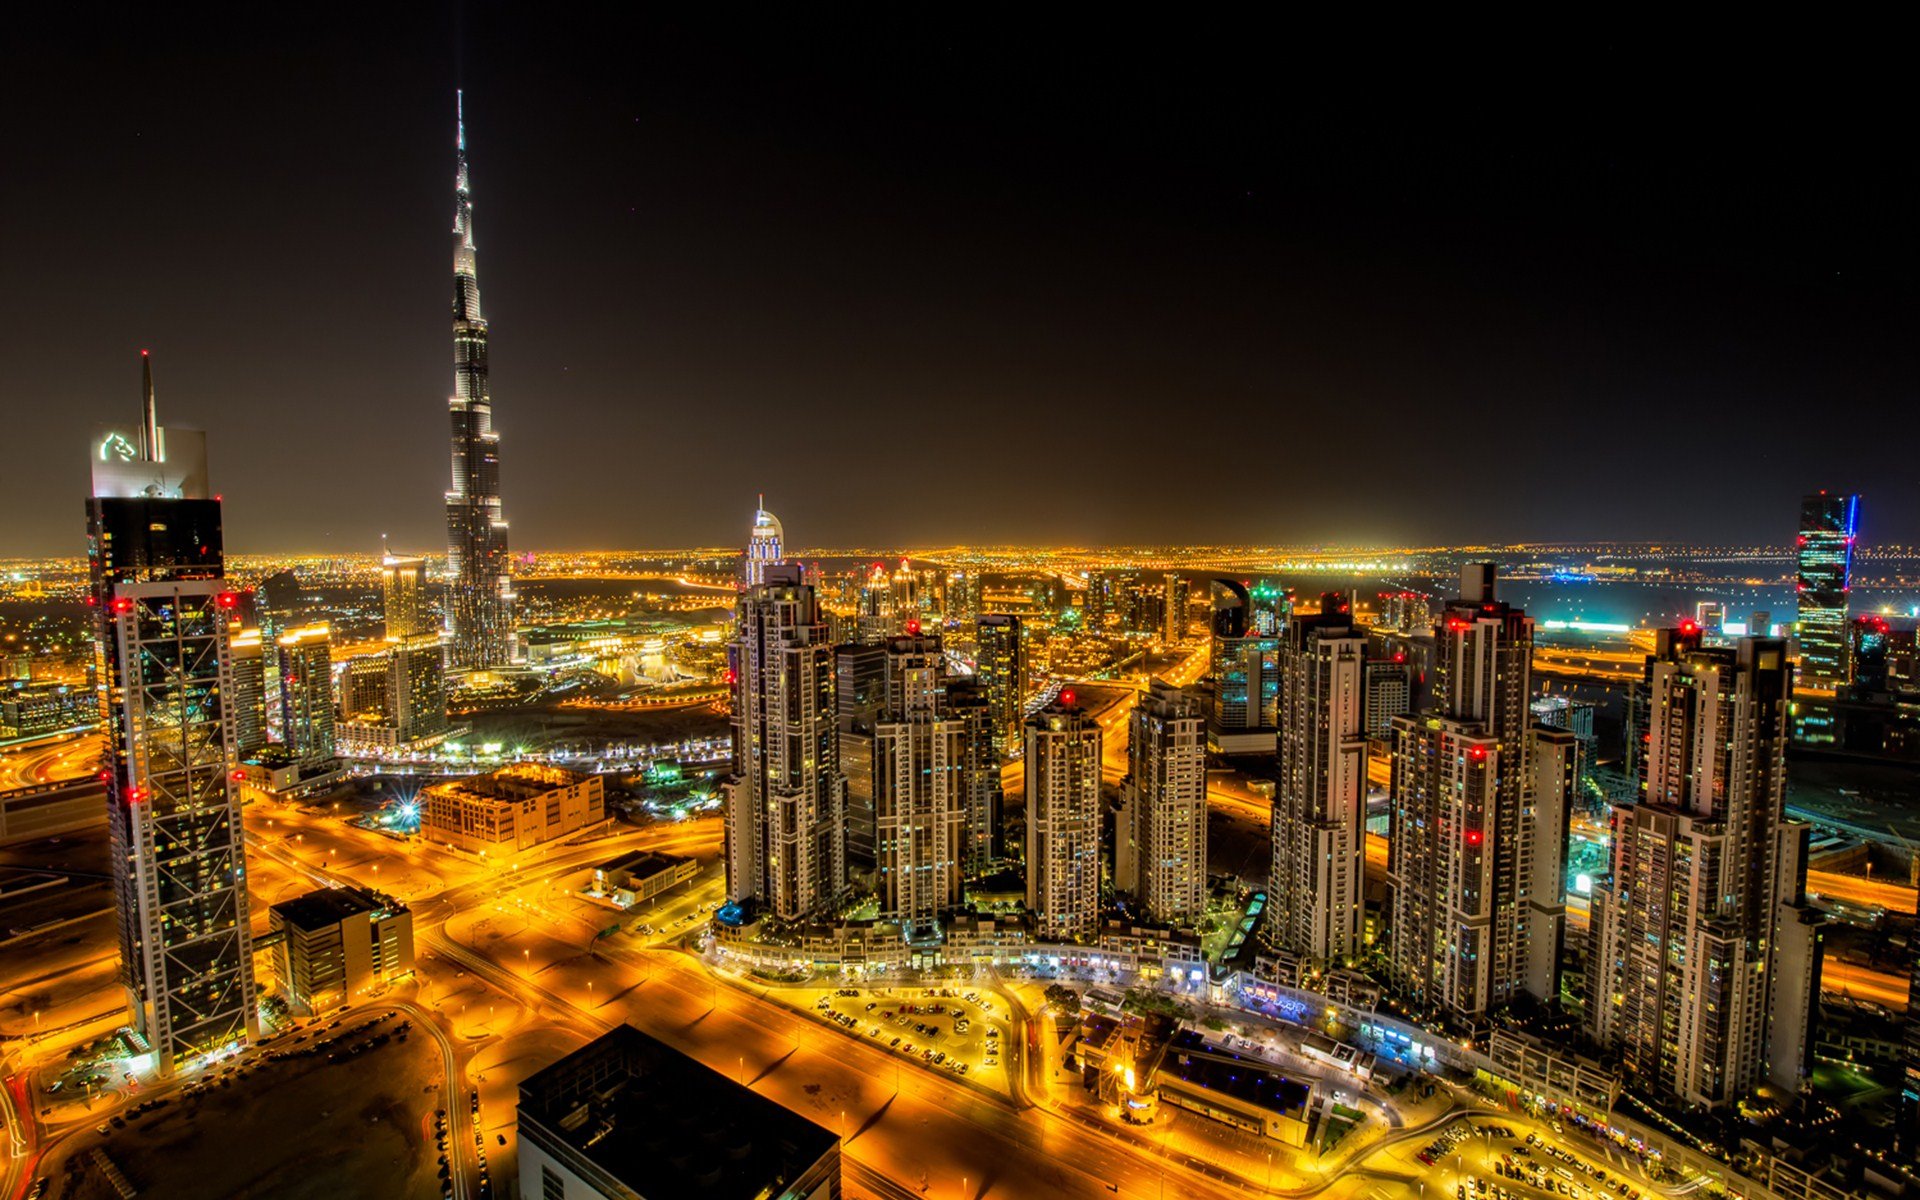 550+ Dubai Night Pictures | Download Free Images on Unsplash